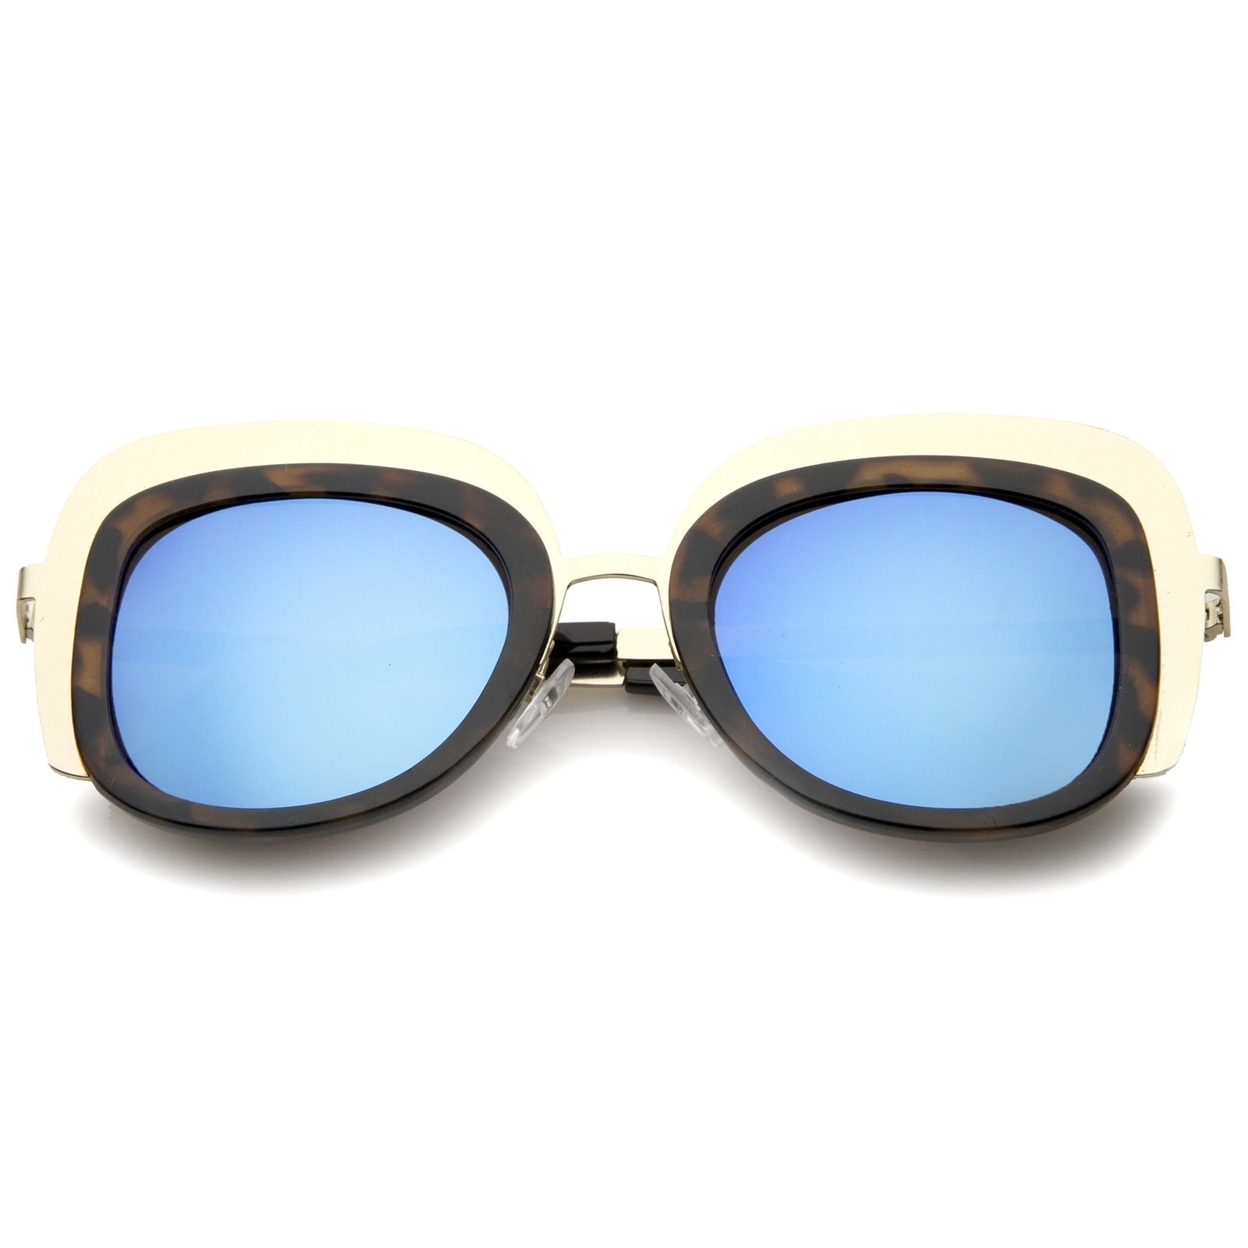 Oversize Metal Frame Border Colored Mirror Lens Square Sunglasses 43mm - Gold-Tortoise / Blue Mirror